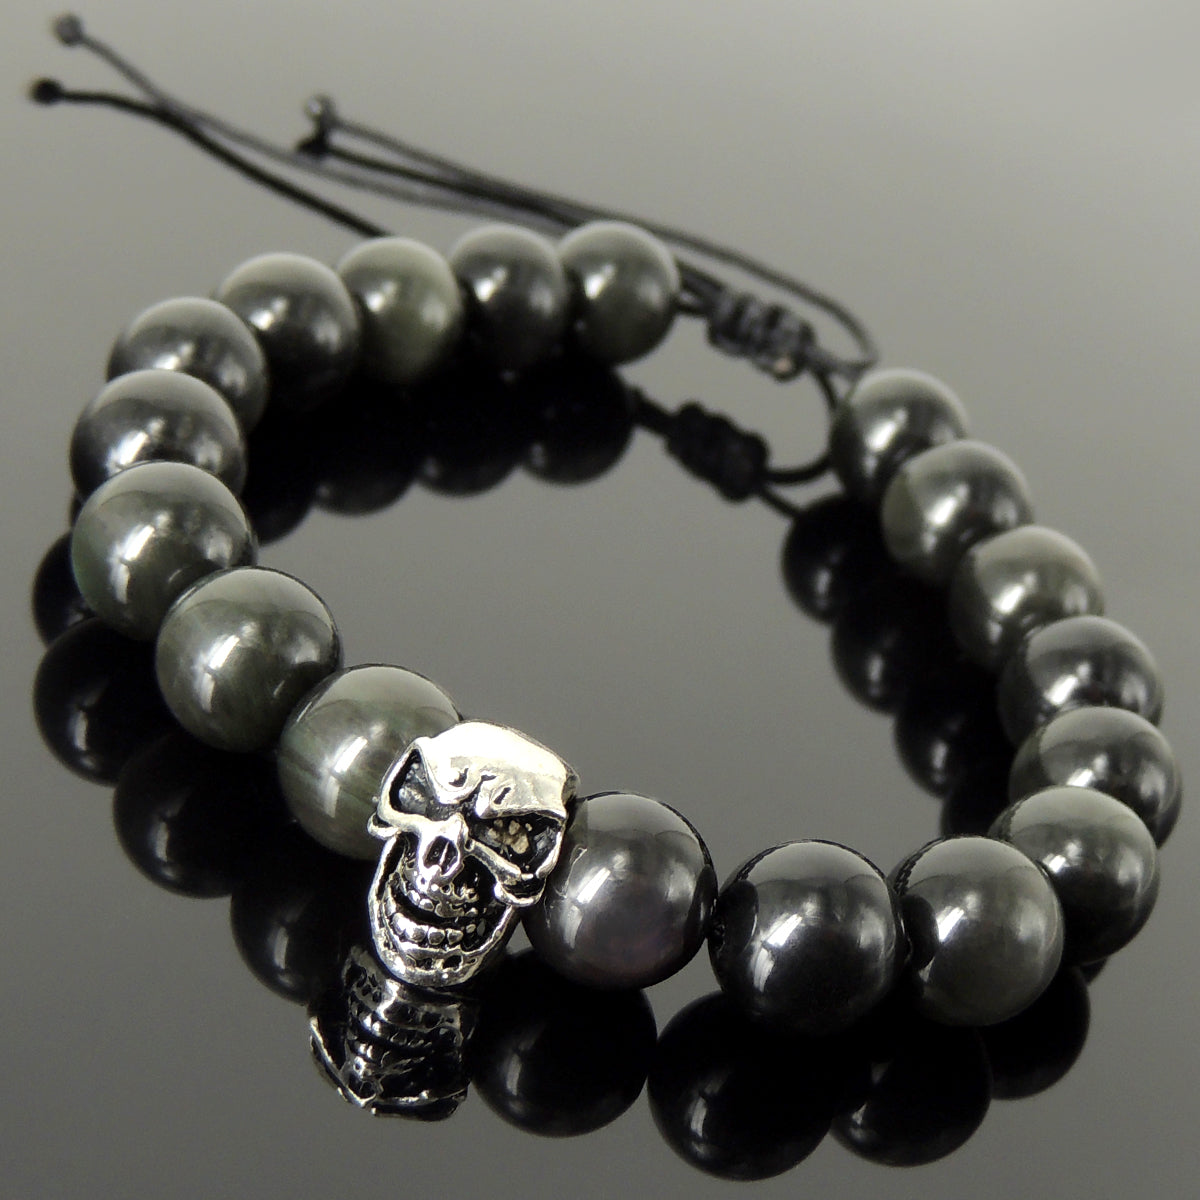 Biker Life Skull Gemstone Jewelry - Men's Women's Handmade Braided Bracelet Protection, Casual Wear with 10mm Rainbow Black Obsidian, Adjustable Drawstring, S925 Sterling Silver Bead BR1725